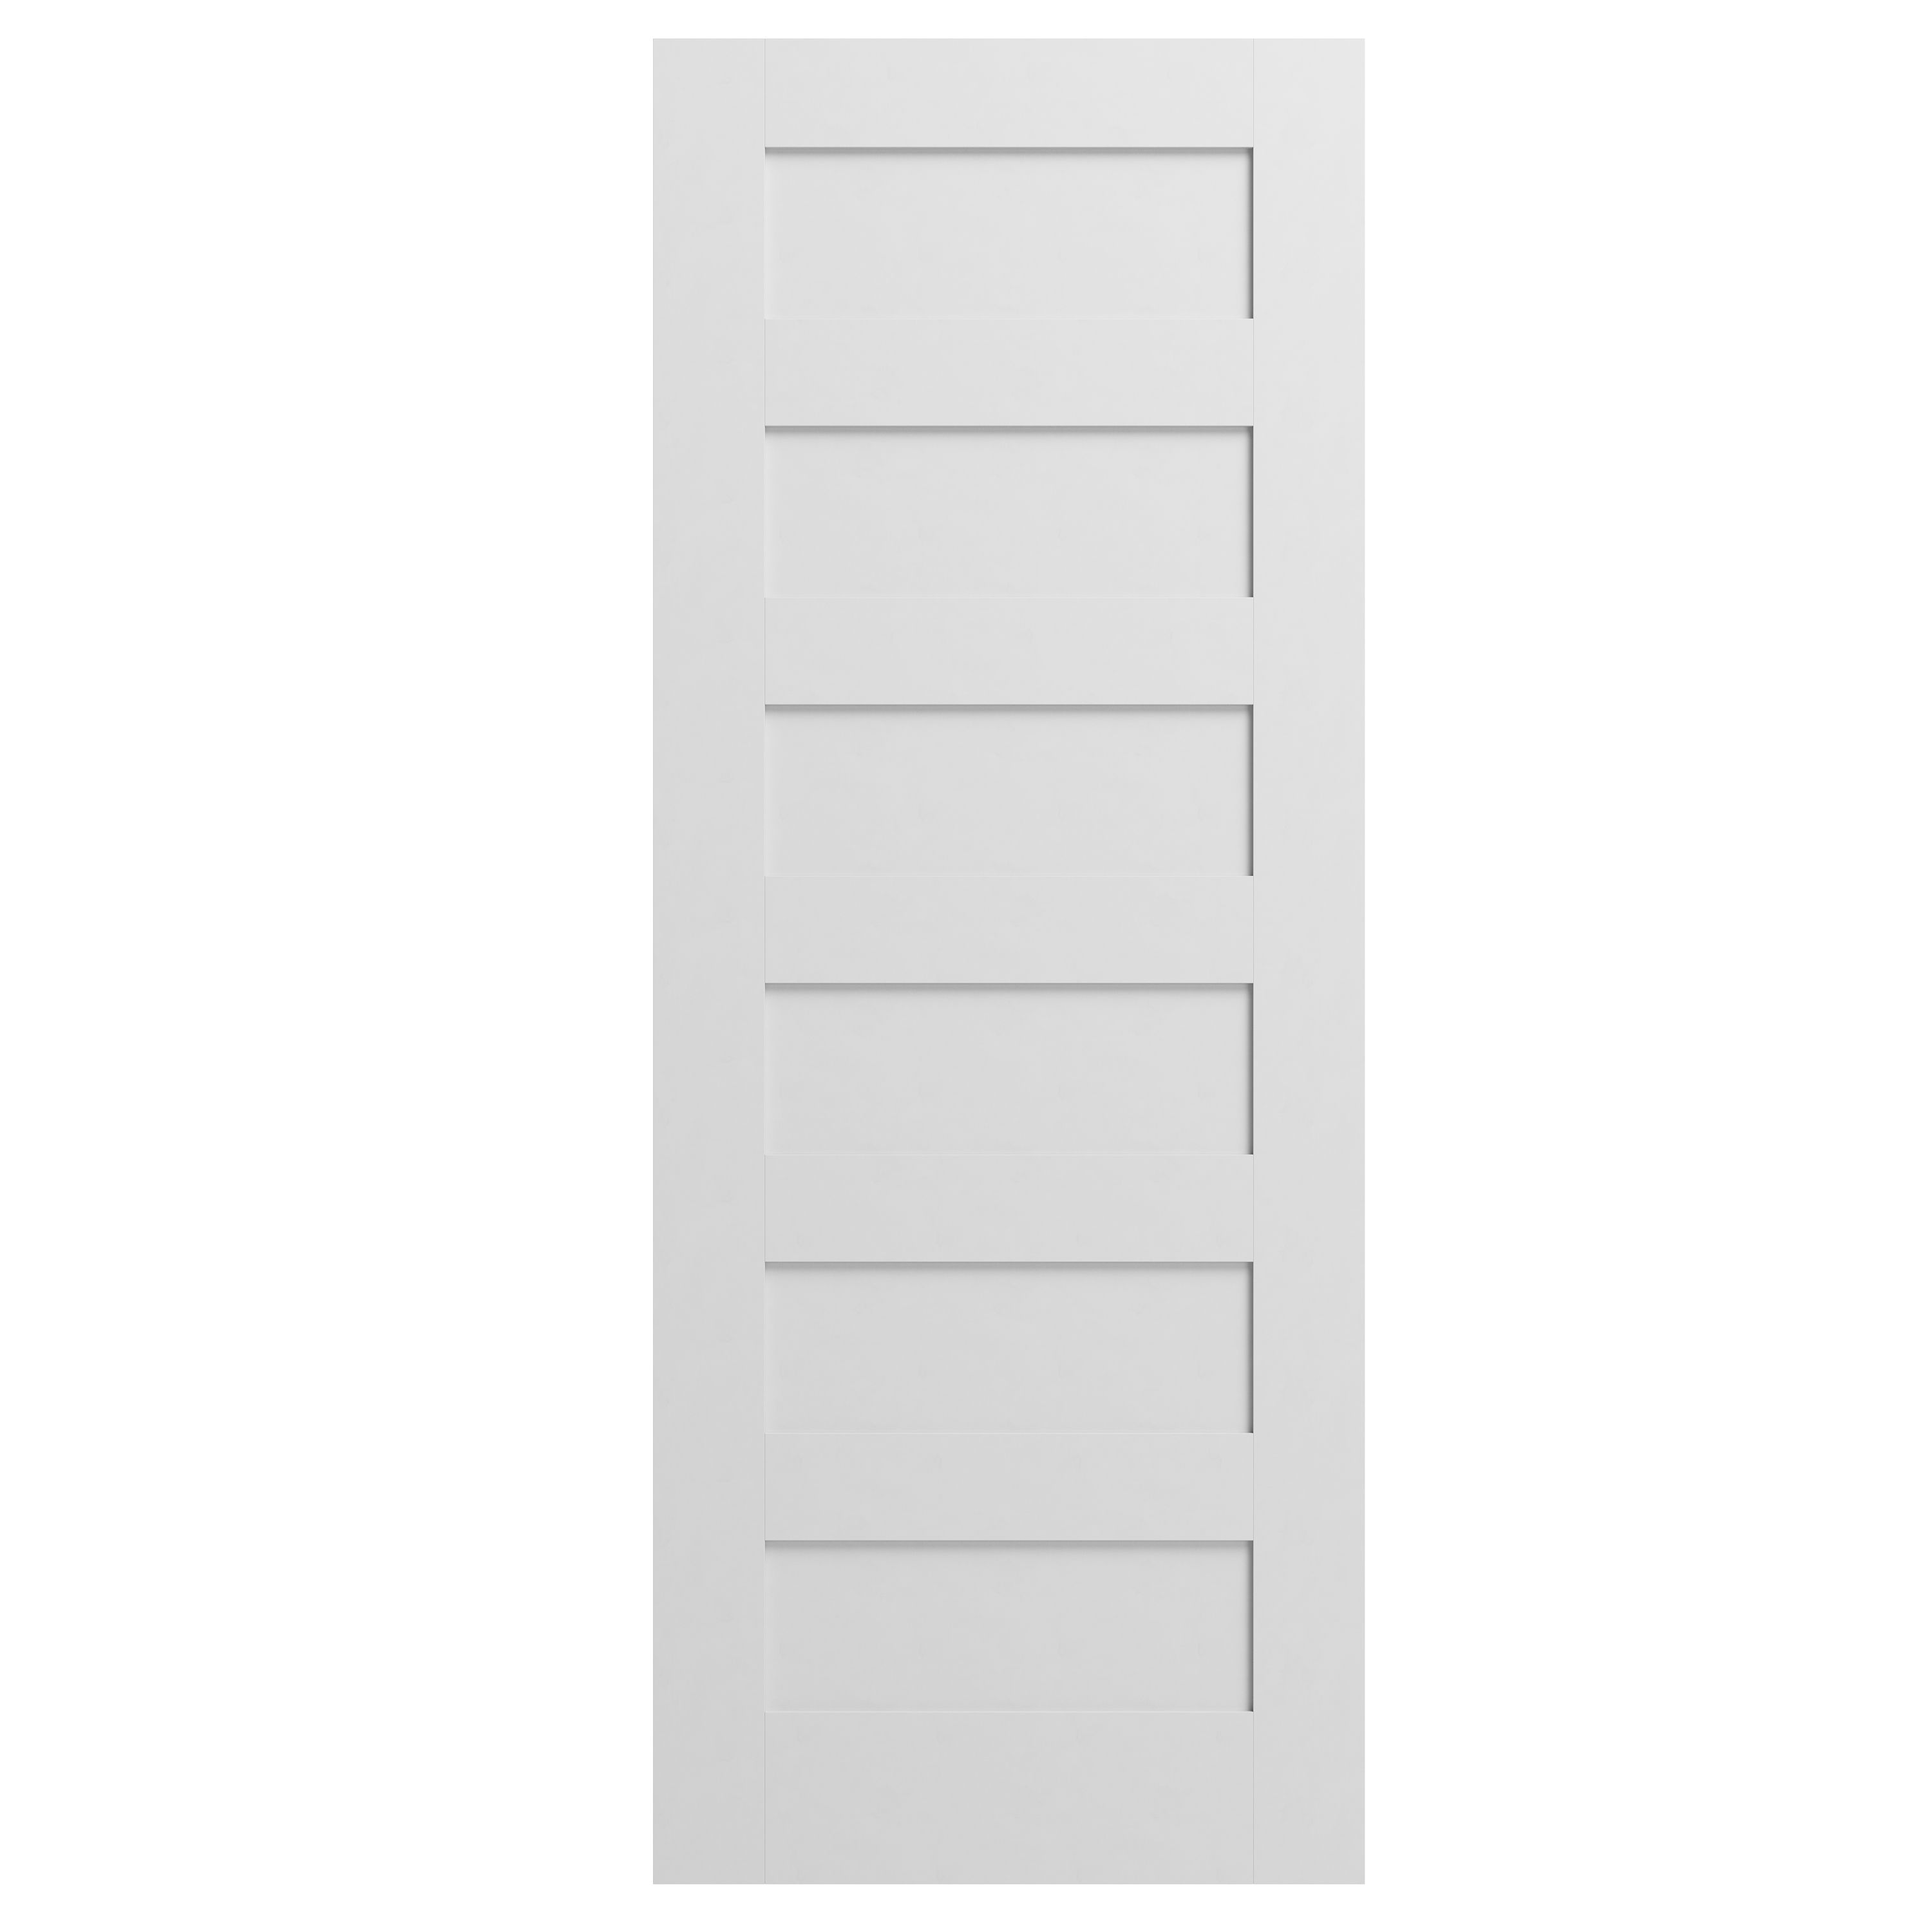 Geom 6 panel Unglazed Shaker White Internal Door, (H)1981mm (W)762mm (T)35mm